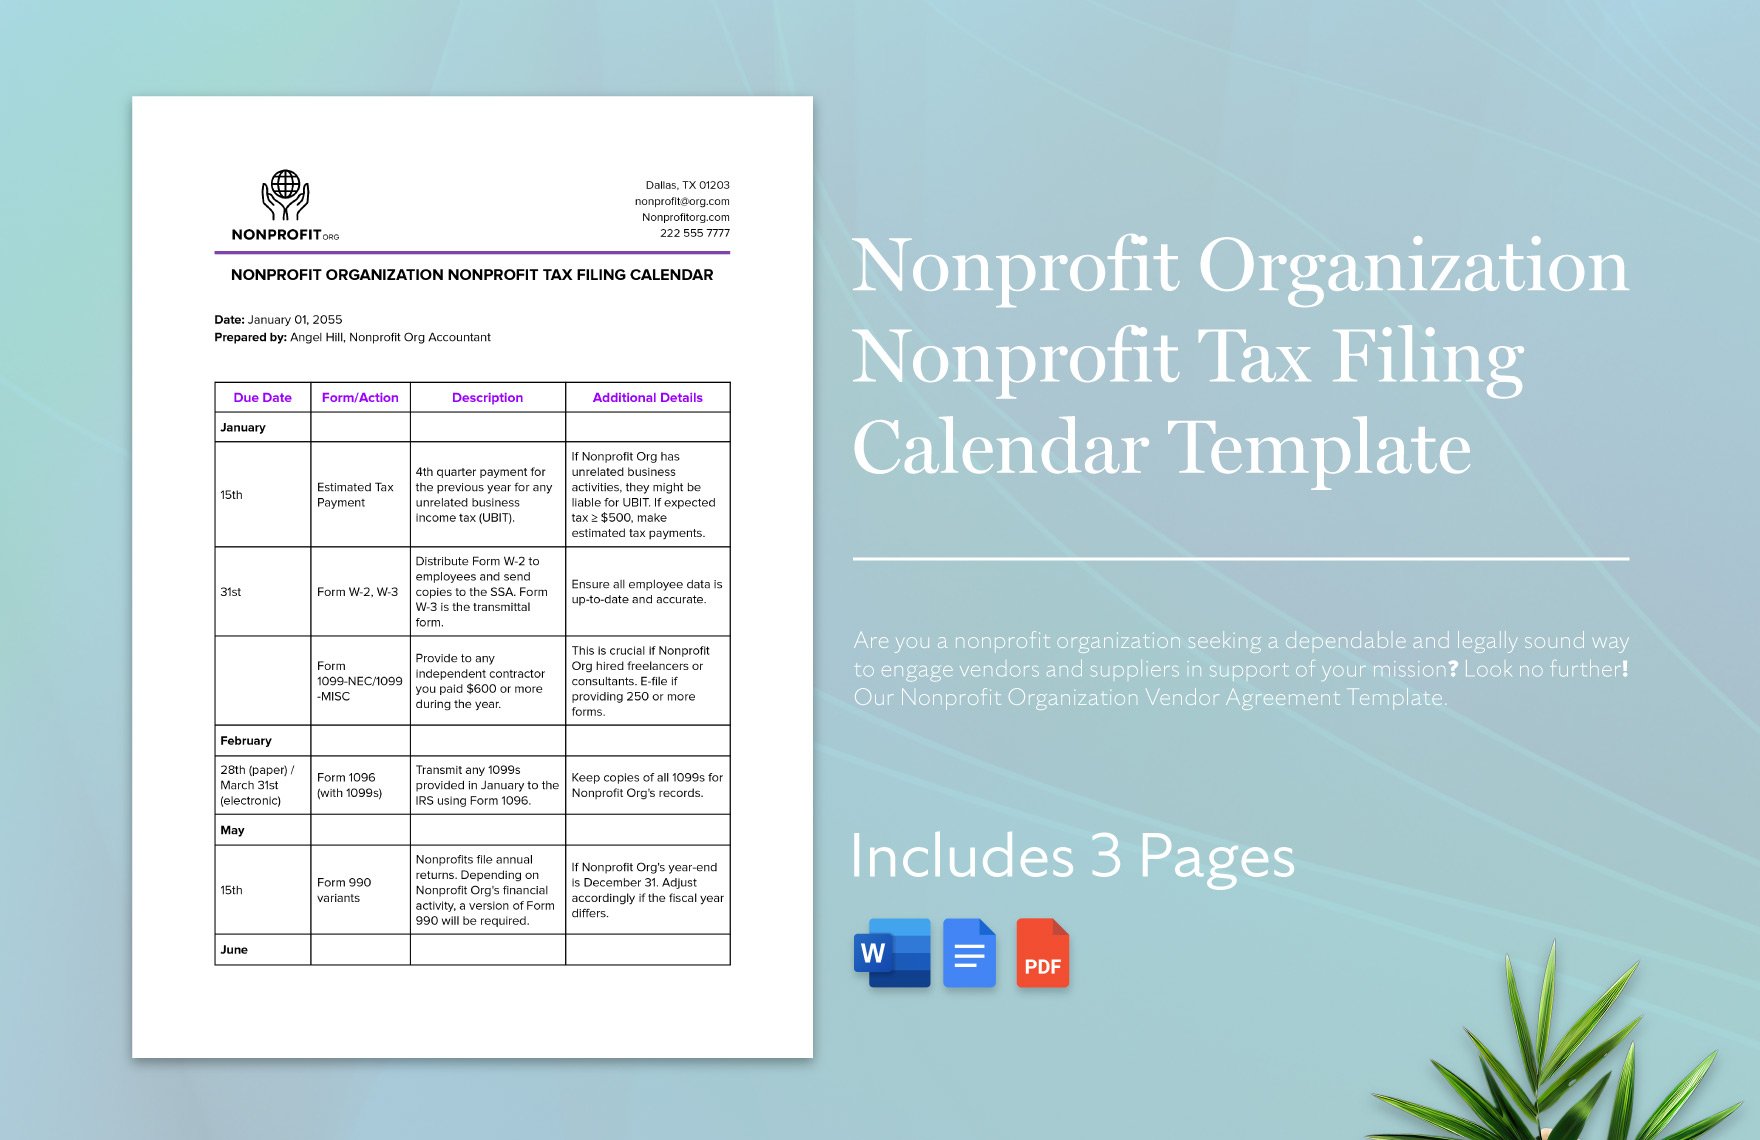 Nonprofit Organization Nonprofit Tax Filing Calendar Template